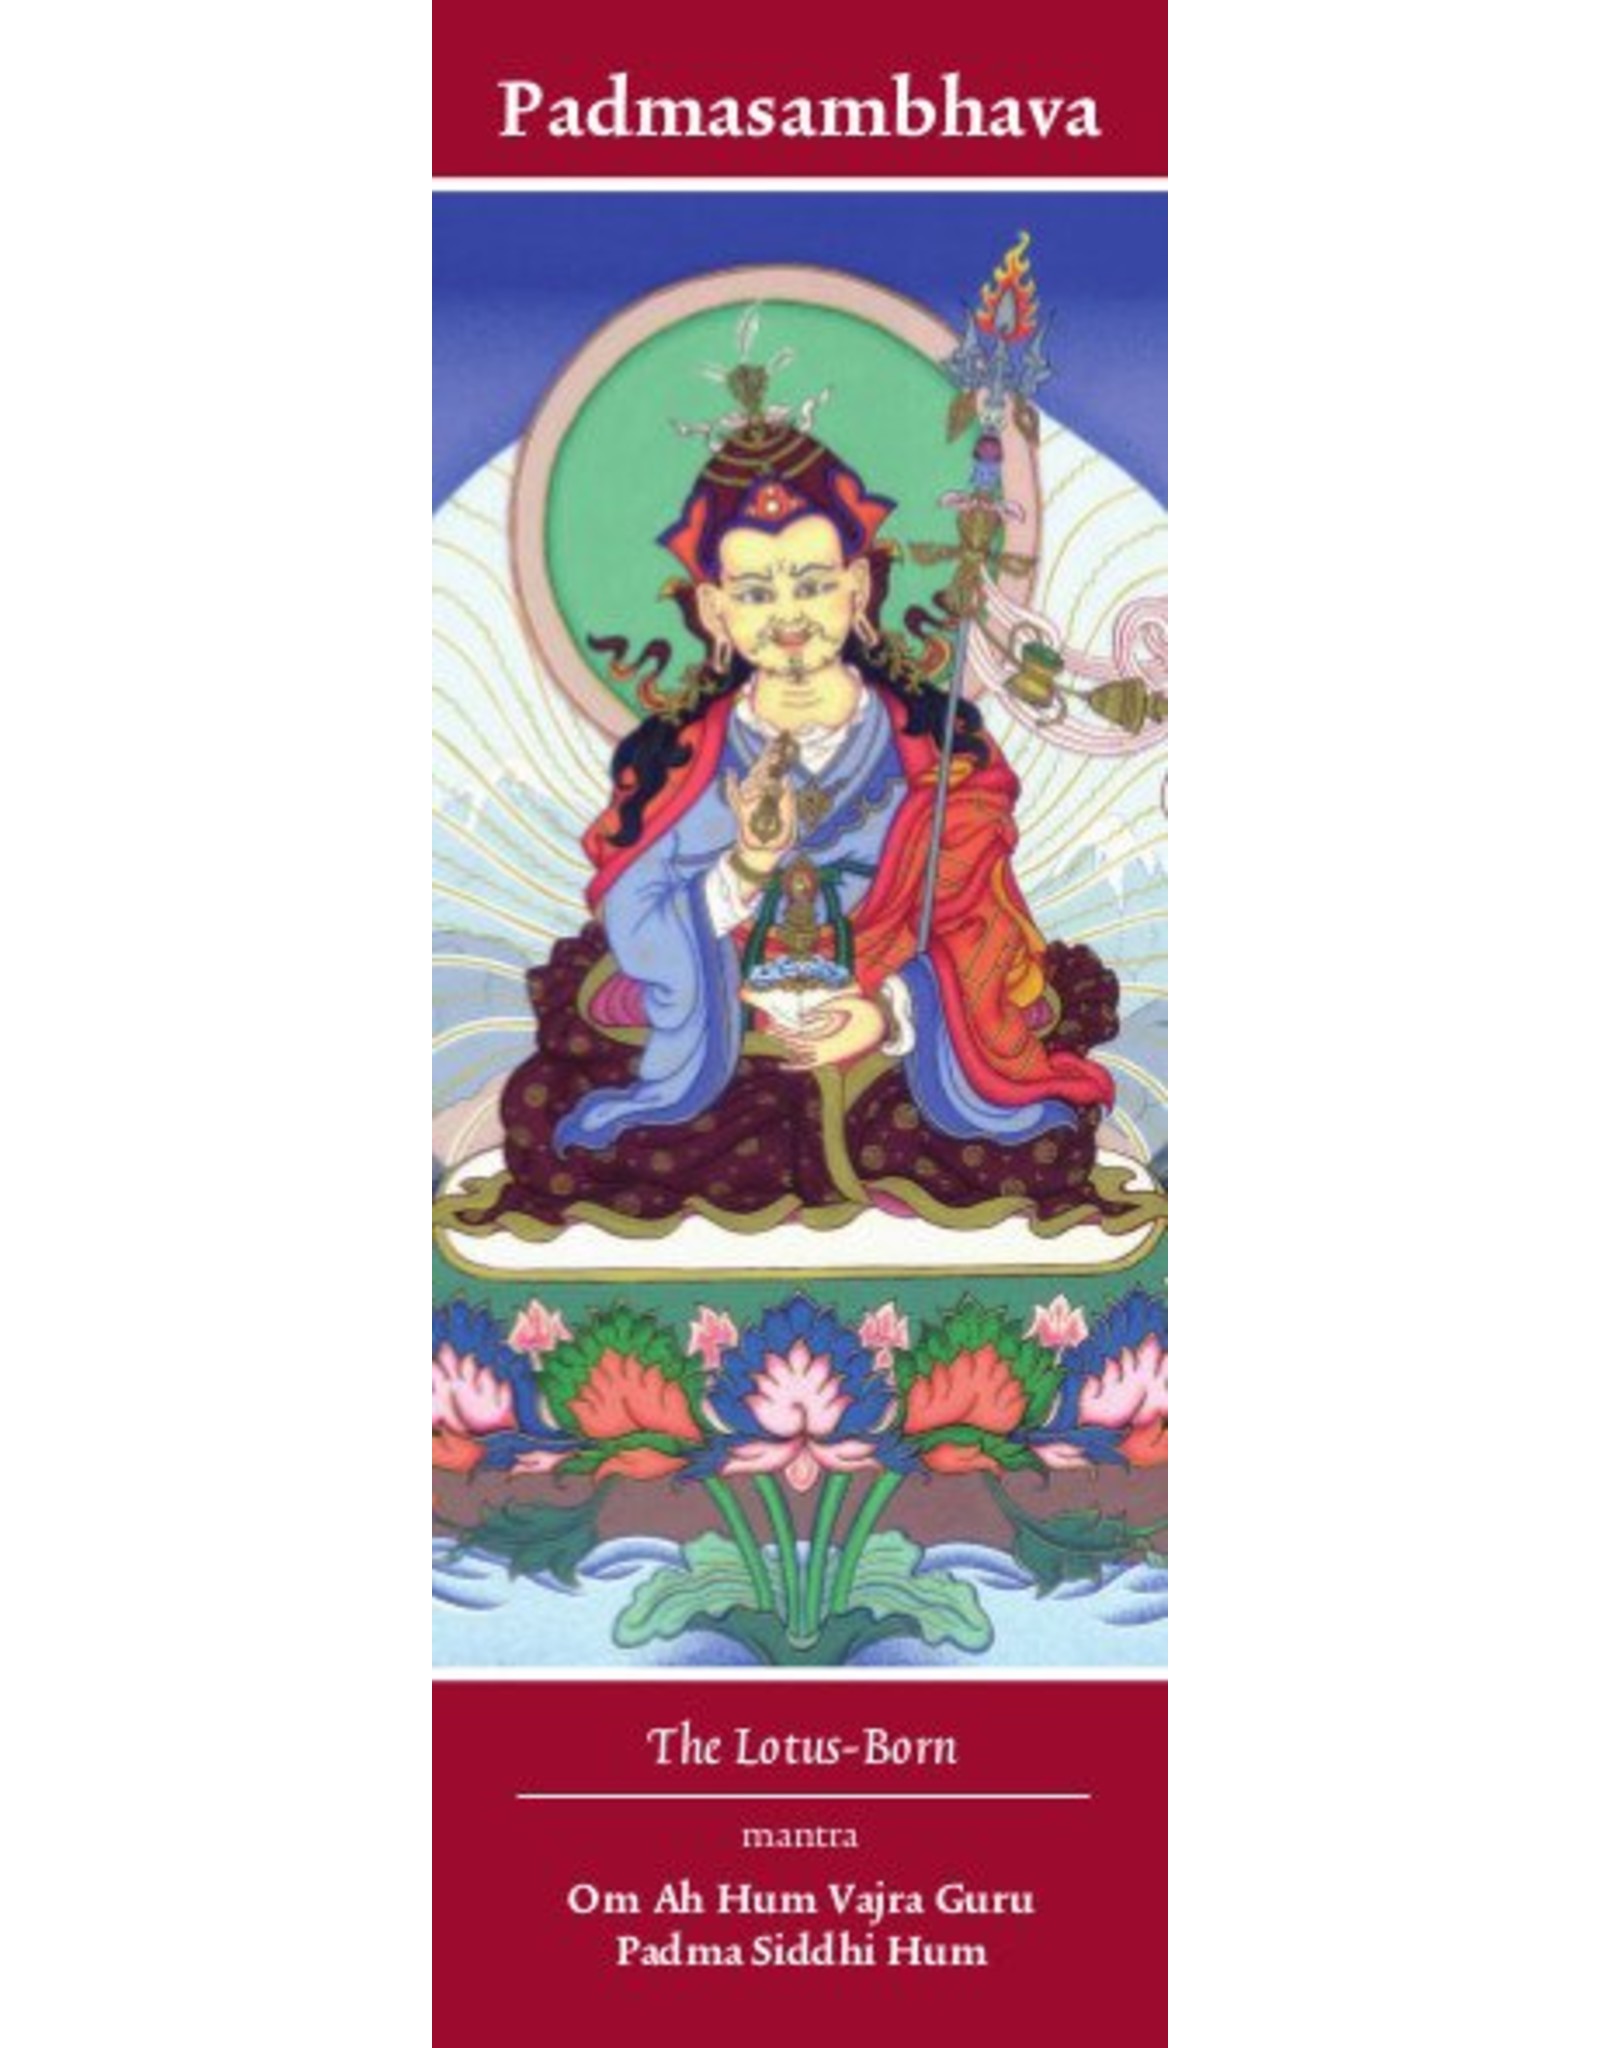 Tibetan Buddhist Art Bookmark giftset